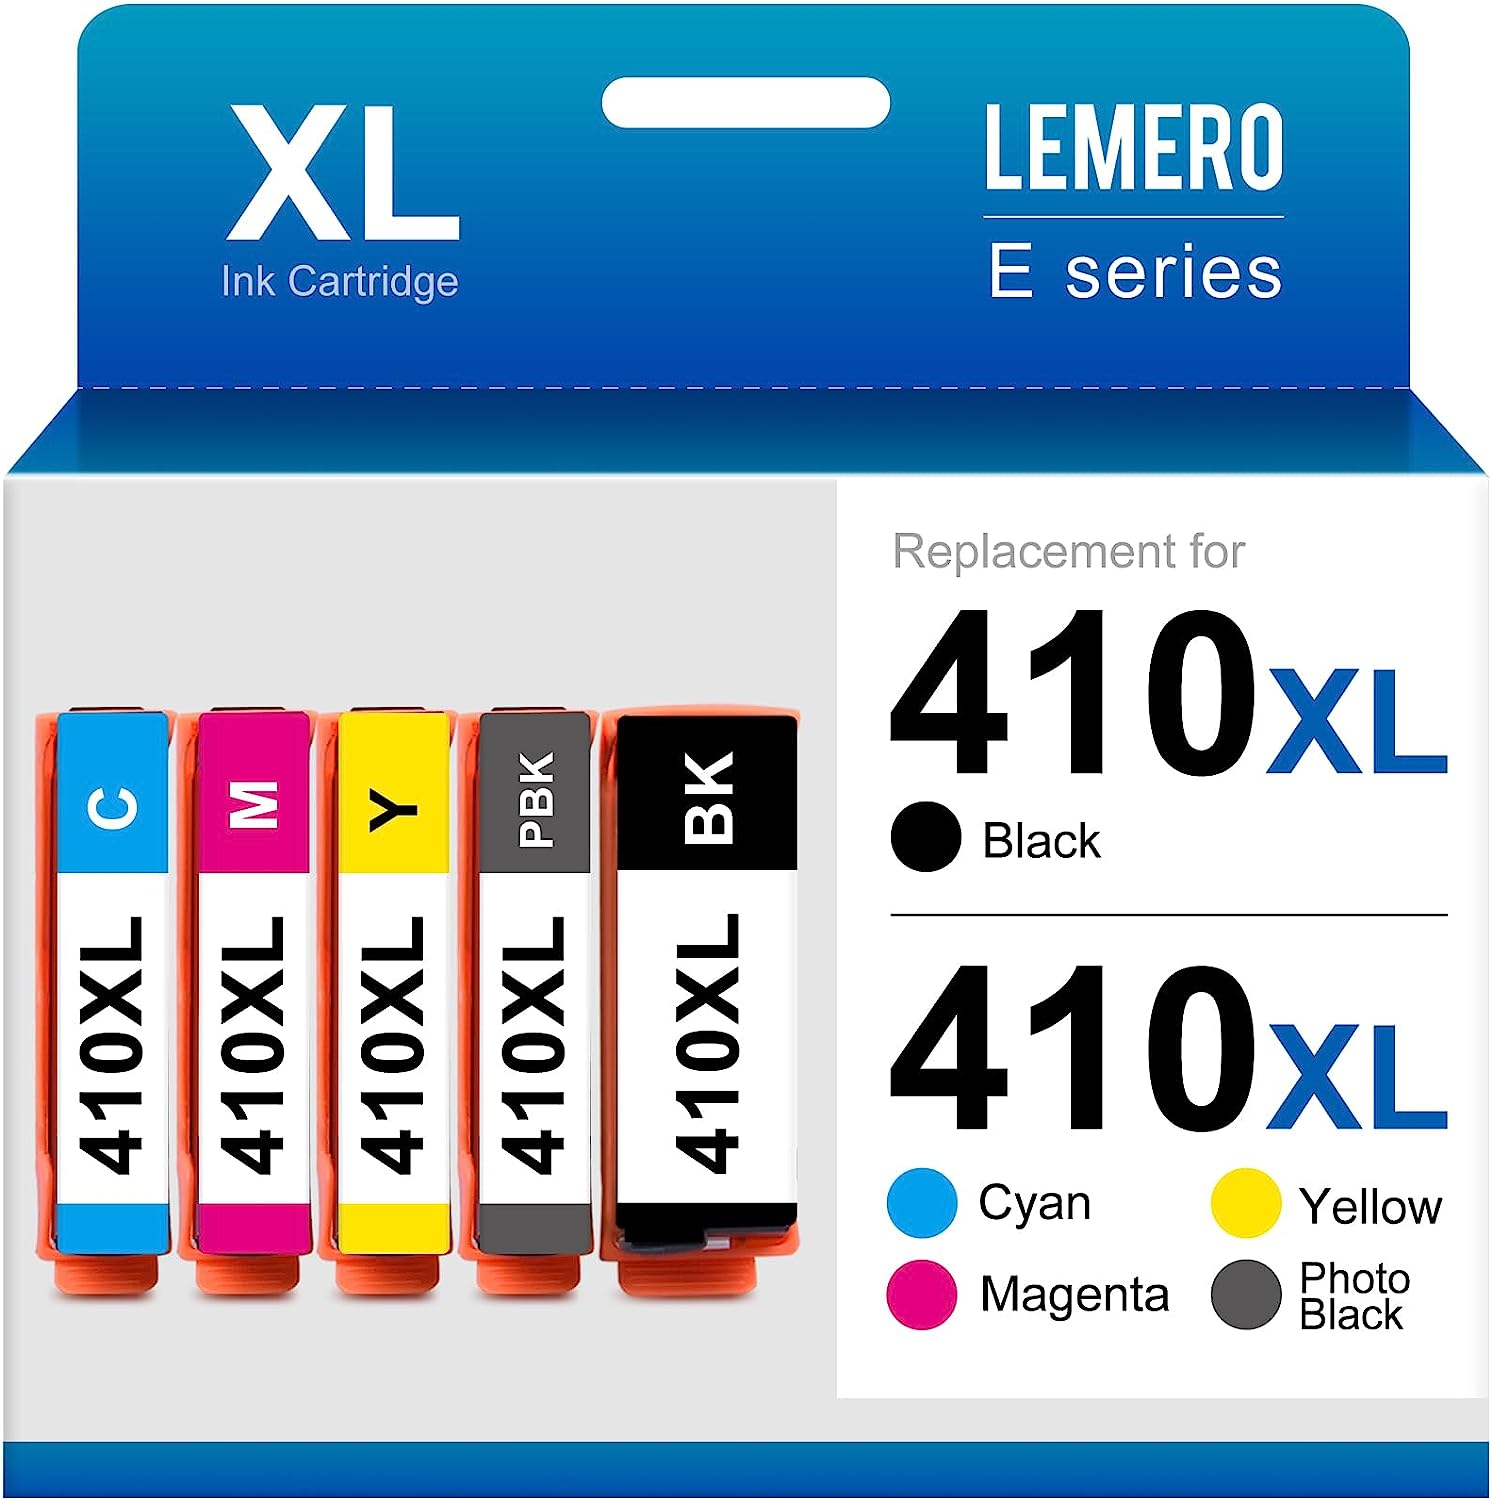 410XL Remanufactured Ink Cartridge for Epson Expression Printer (Black Cyan Magenta Yellow Photo Black, 5 Pack) - Linford Office:Printer Ink & Toner Cartridge